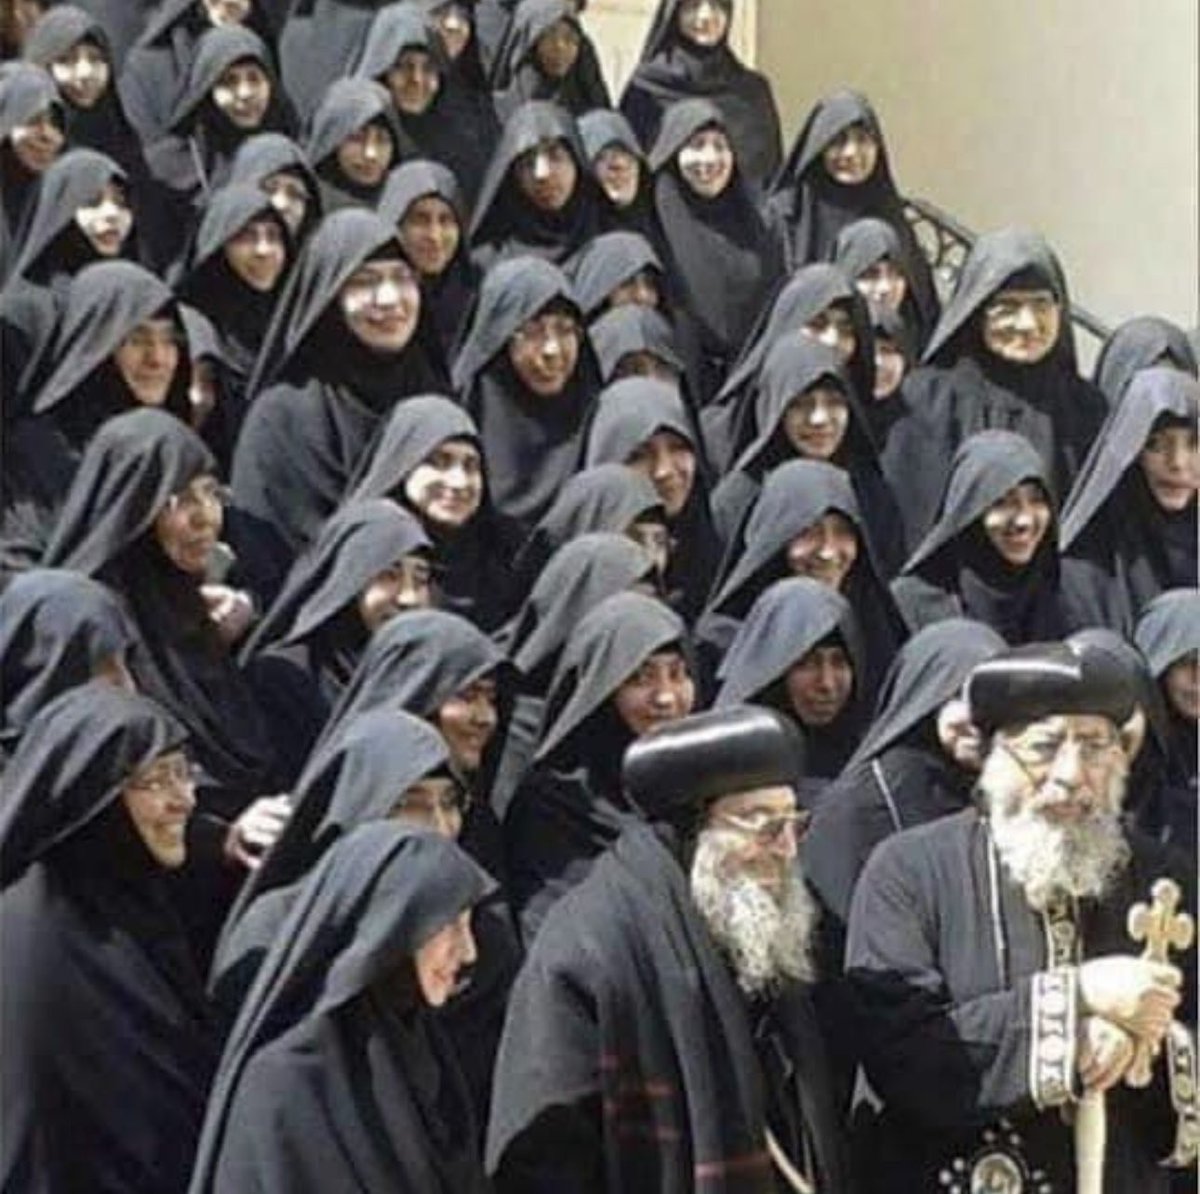 Do these Catholic Women “want” to be oppressed? 
#BoycottPiersMorgan